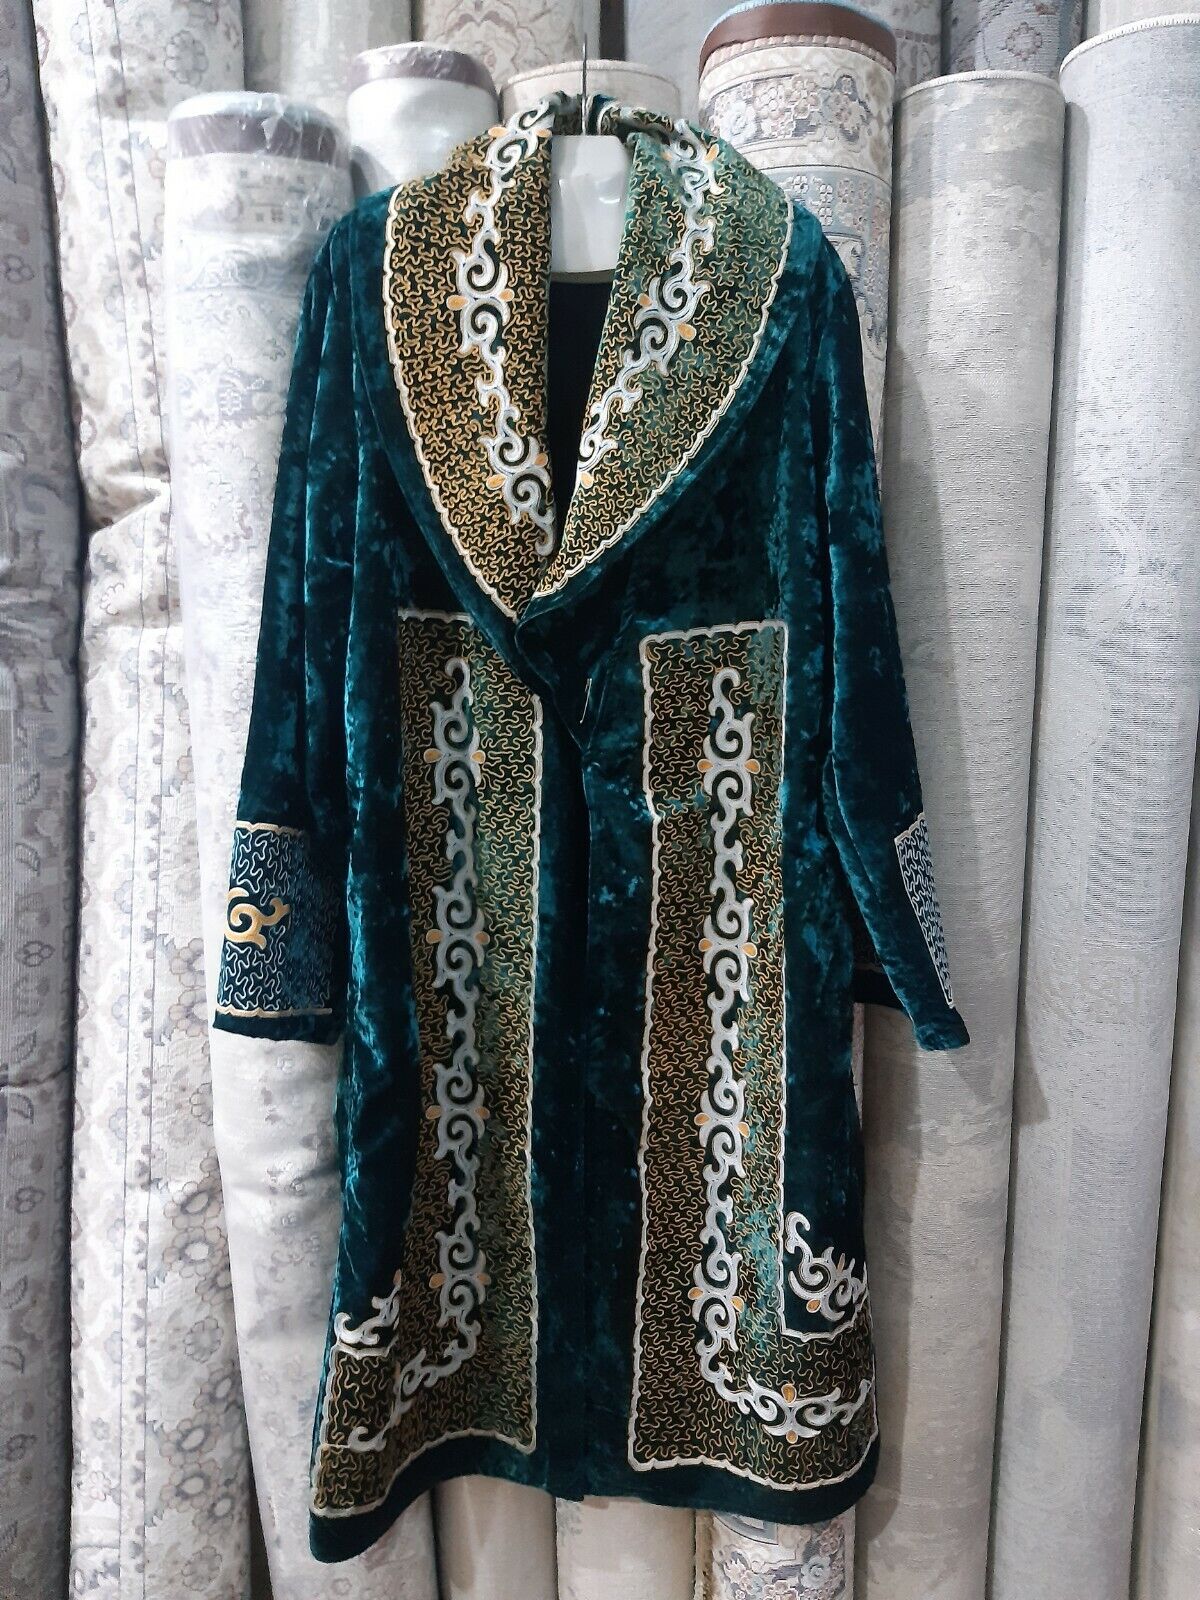 Genghis Khan chapan shapan robe outdoor mongol  handmade ethnic clother  L XL